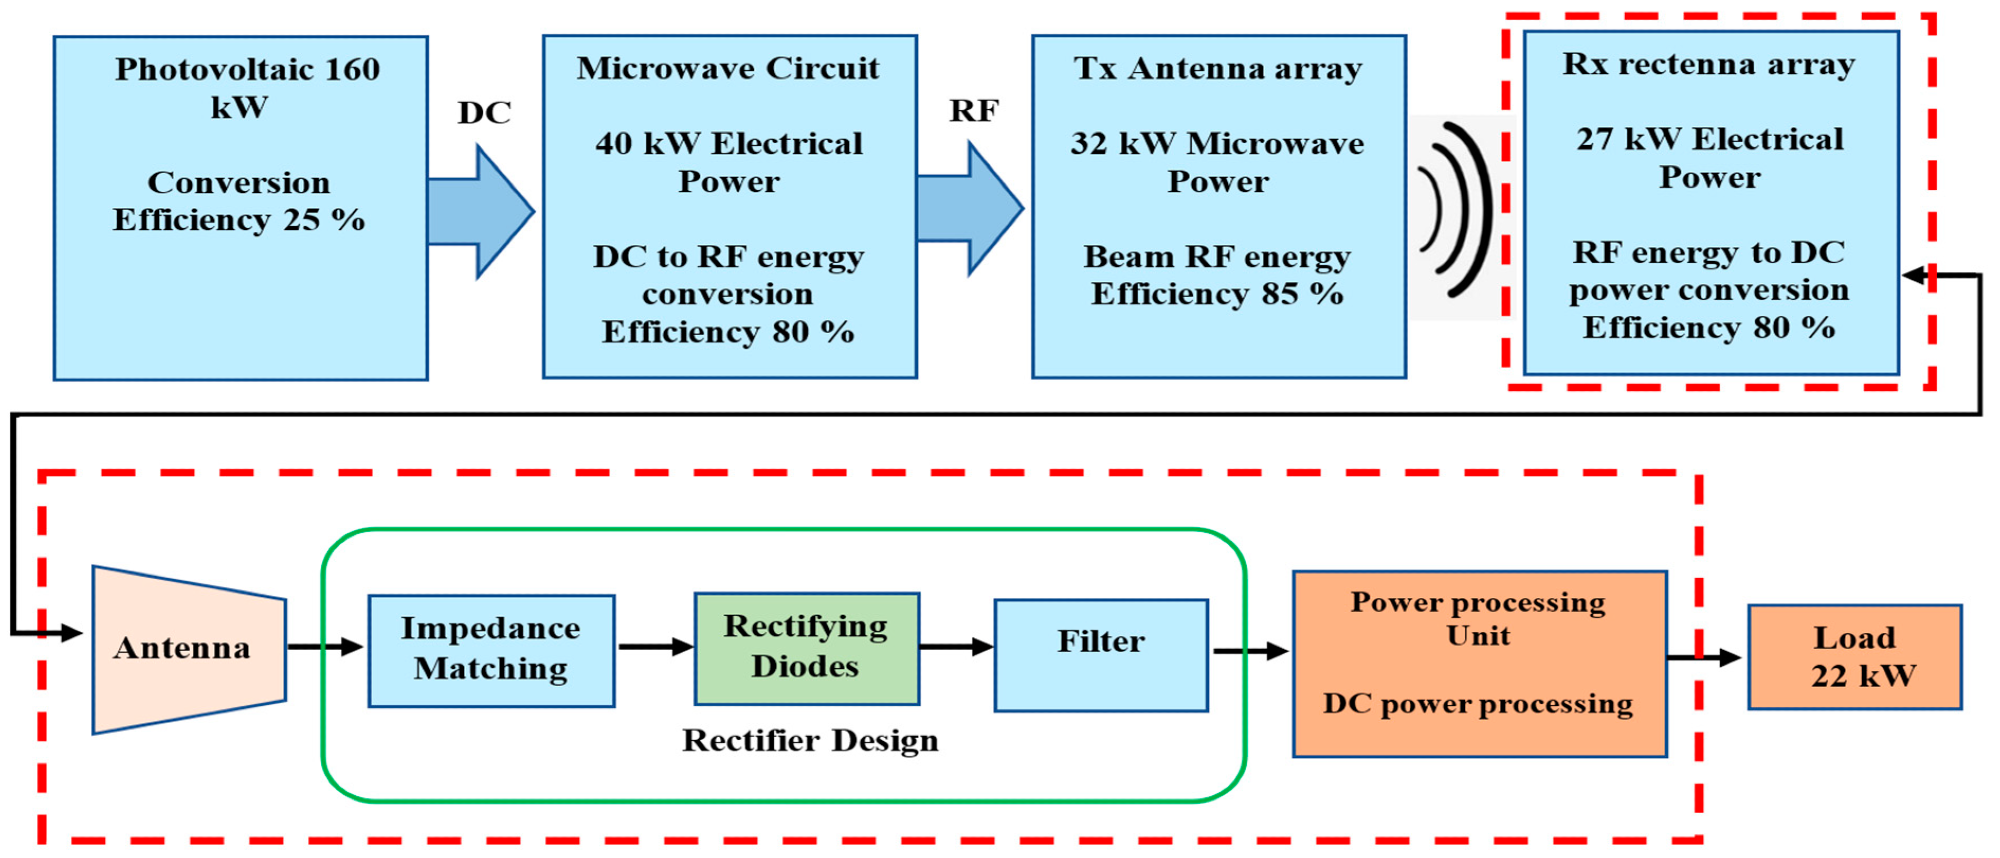 Microwave power transmission block diagram.